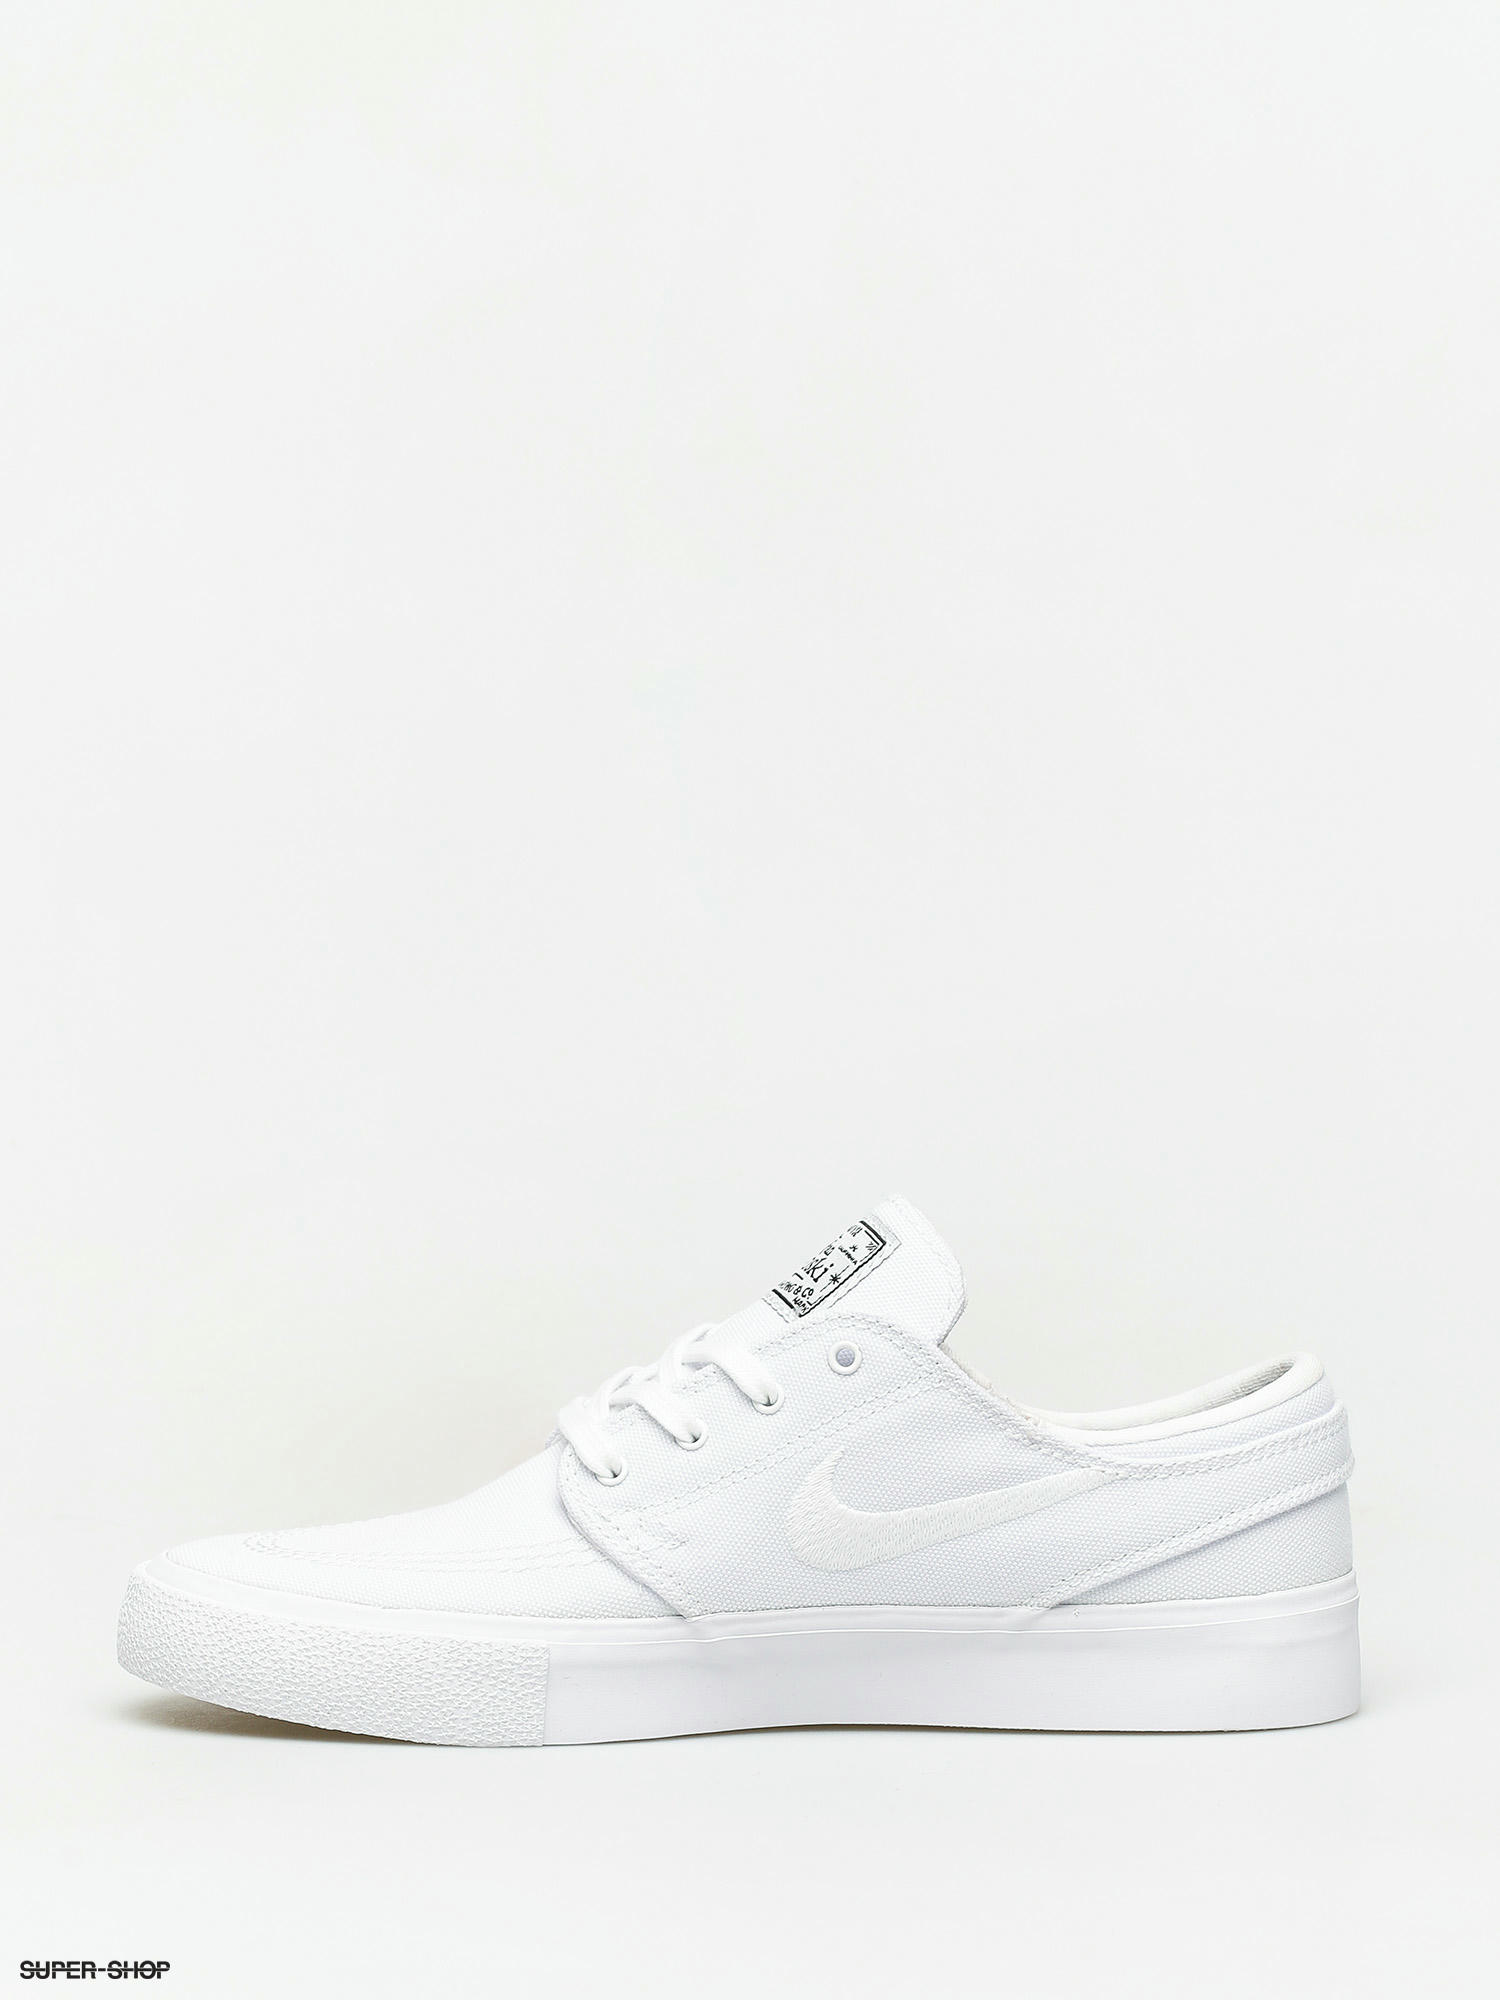 werper Bulk Land Nike SB Zoom Janoski Canvas Rm Shoes (white/white gum light brown black)